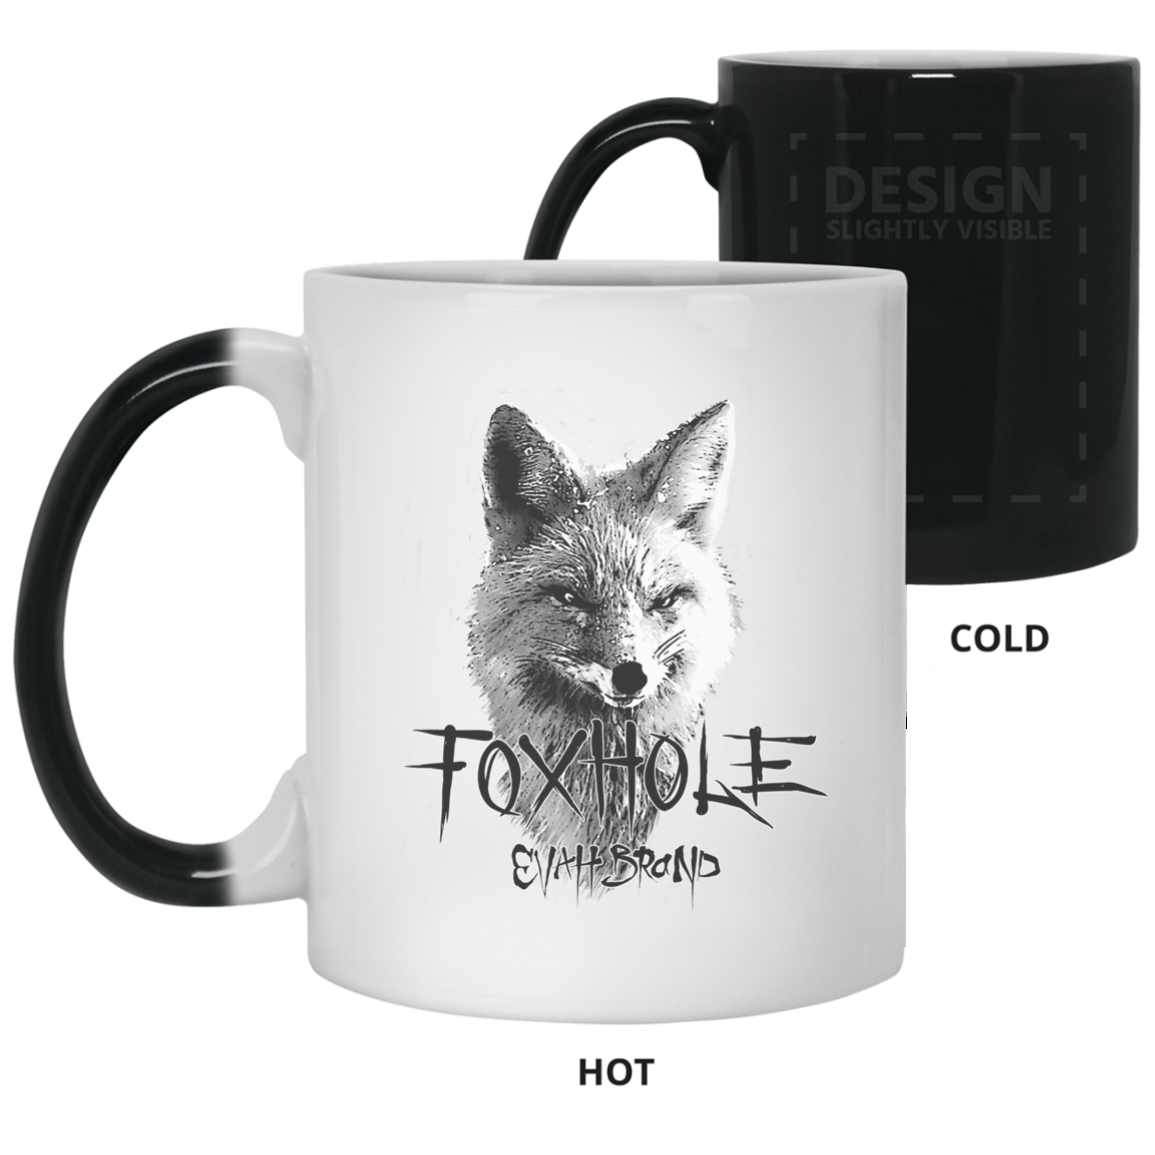 FOXHOLE+EVAHBRAND Magic Mugs